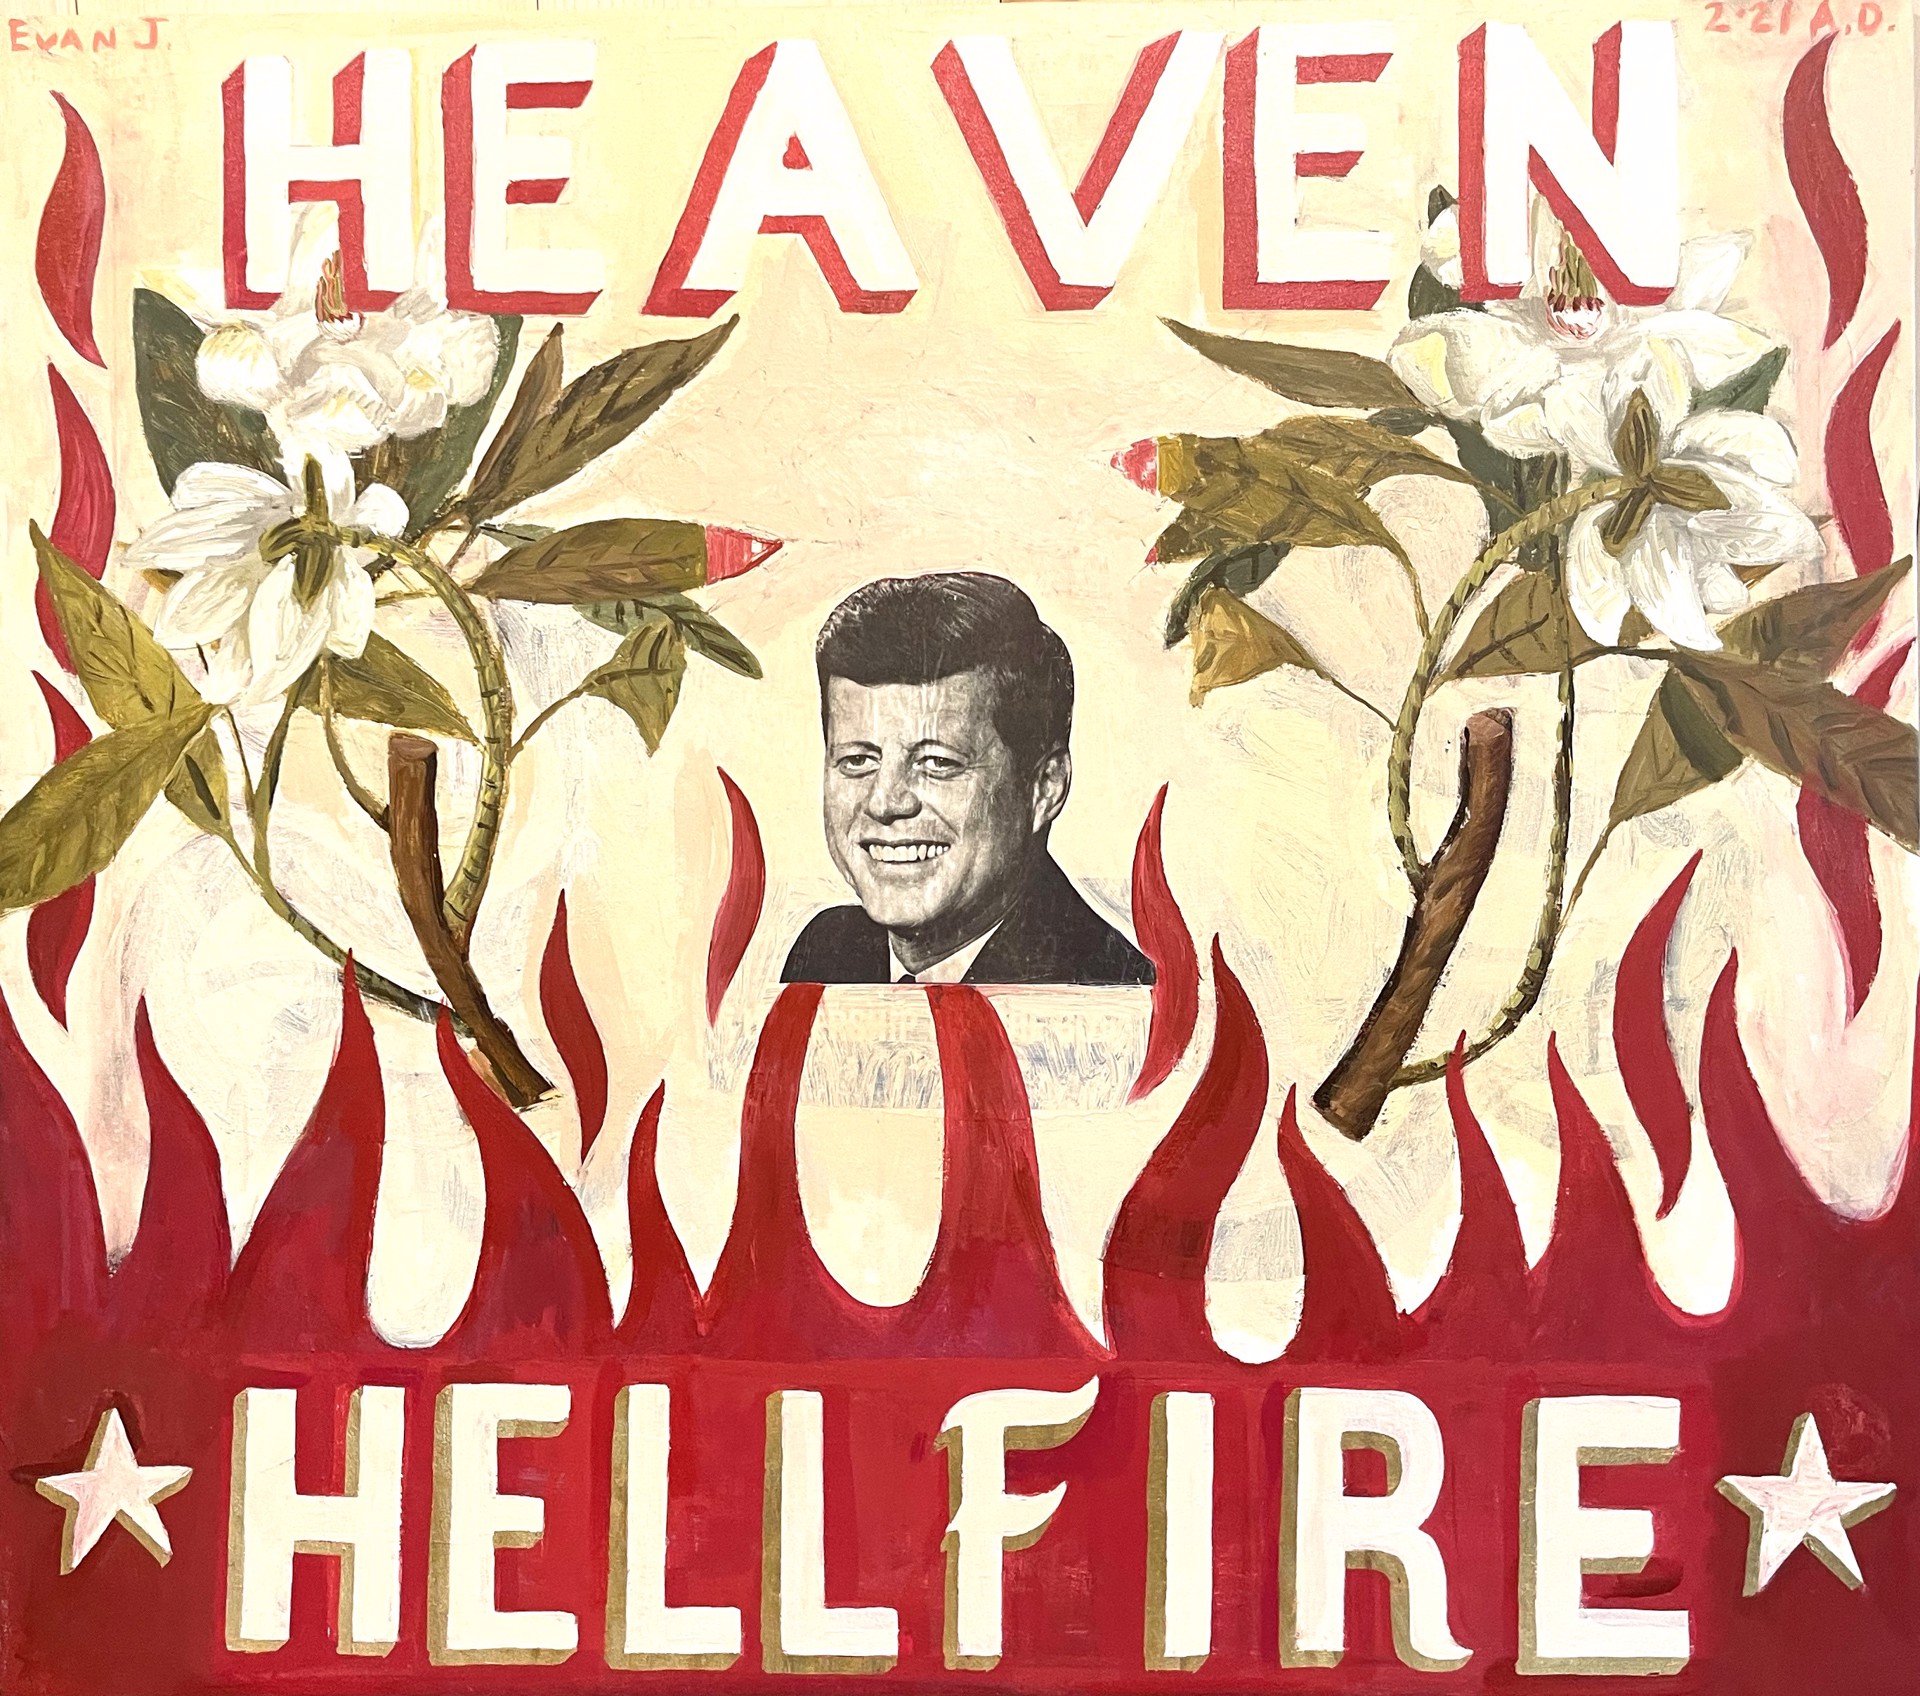 Heaven or Hellfire by Evan Jones